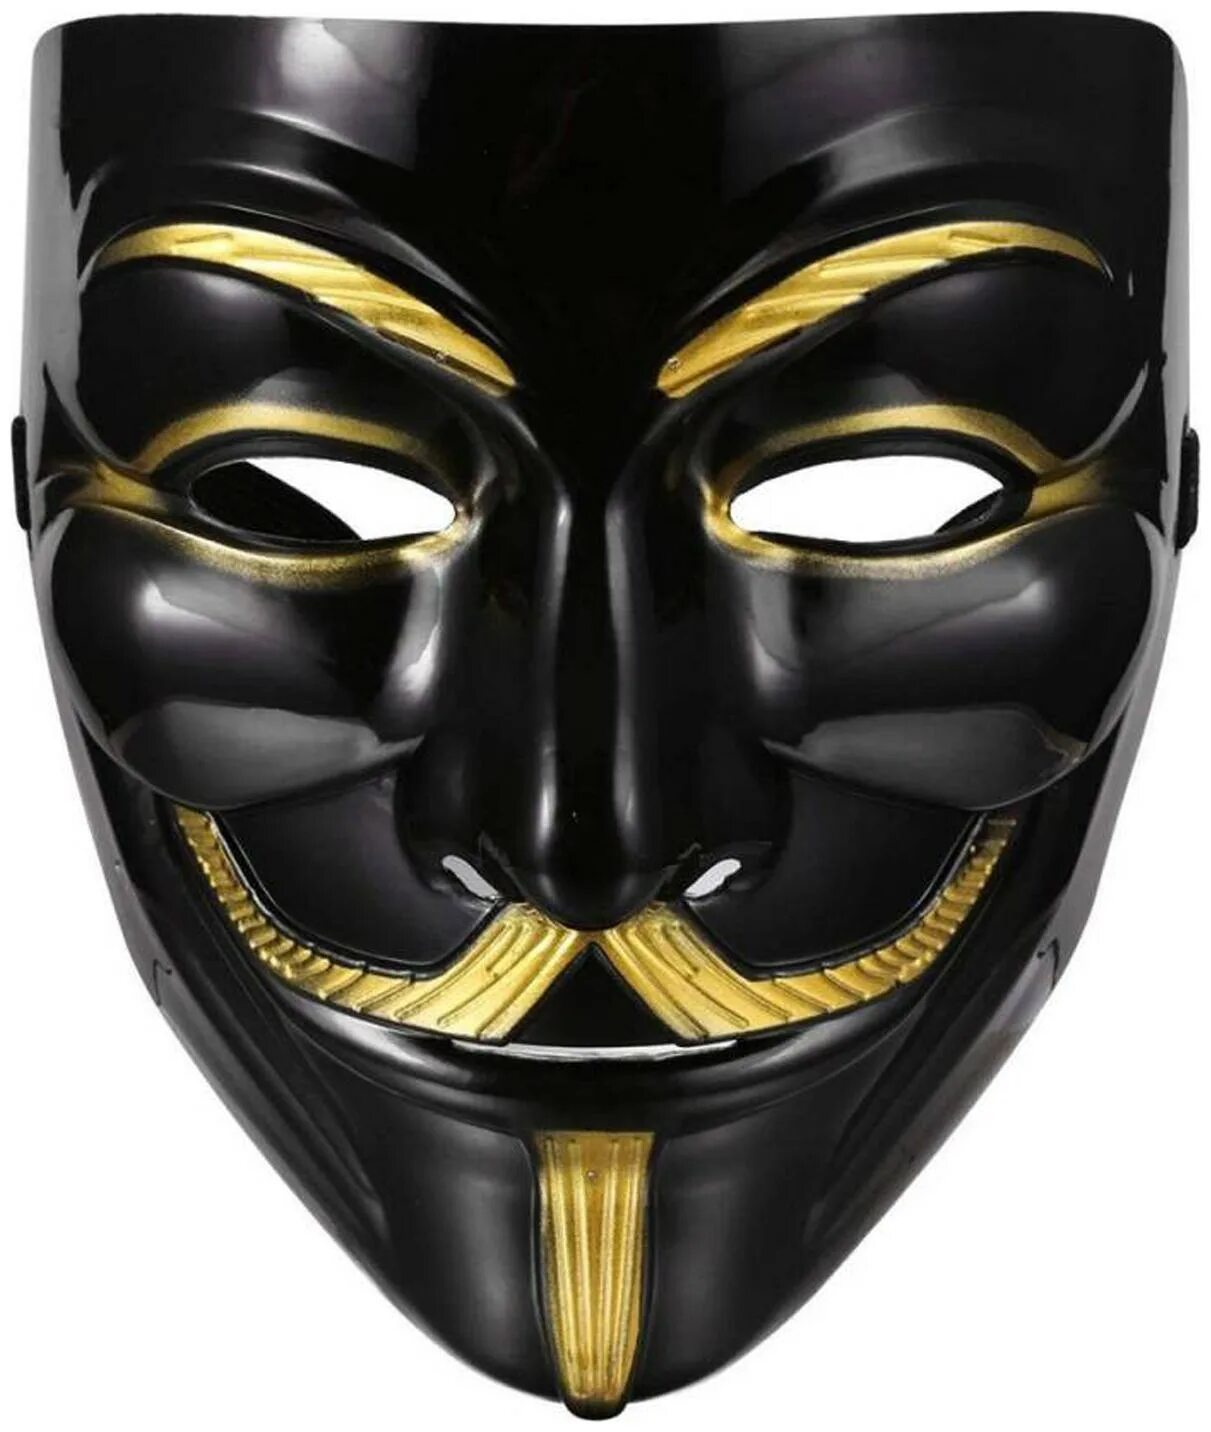 Маска Анонимуса. V Vendetta маска. Маска Гая Фокса. Маска вендетта черная.